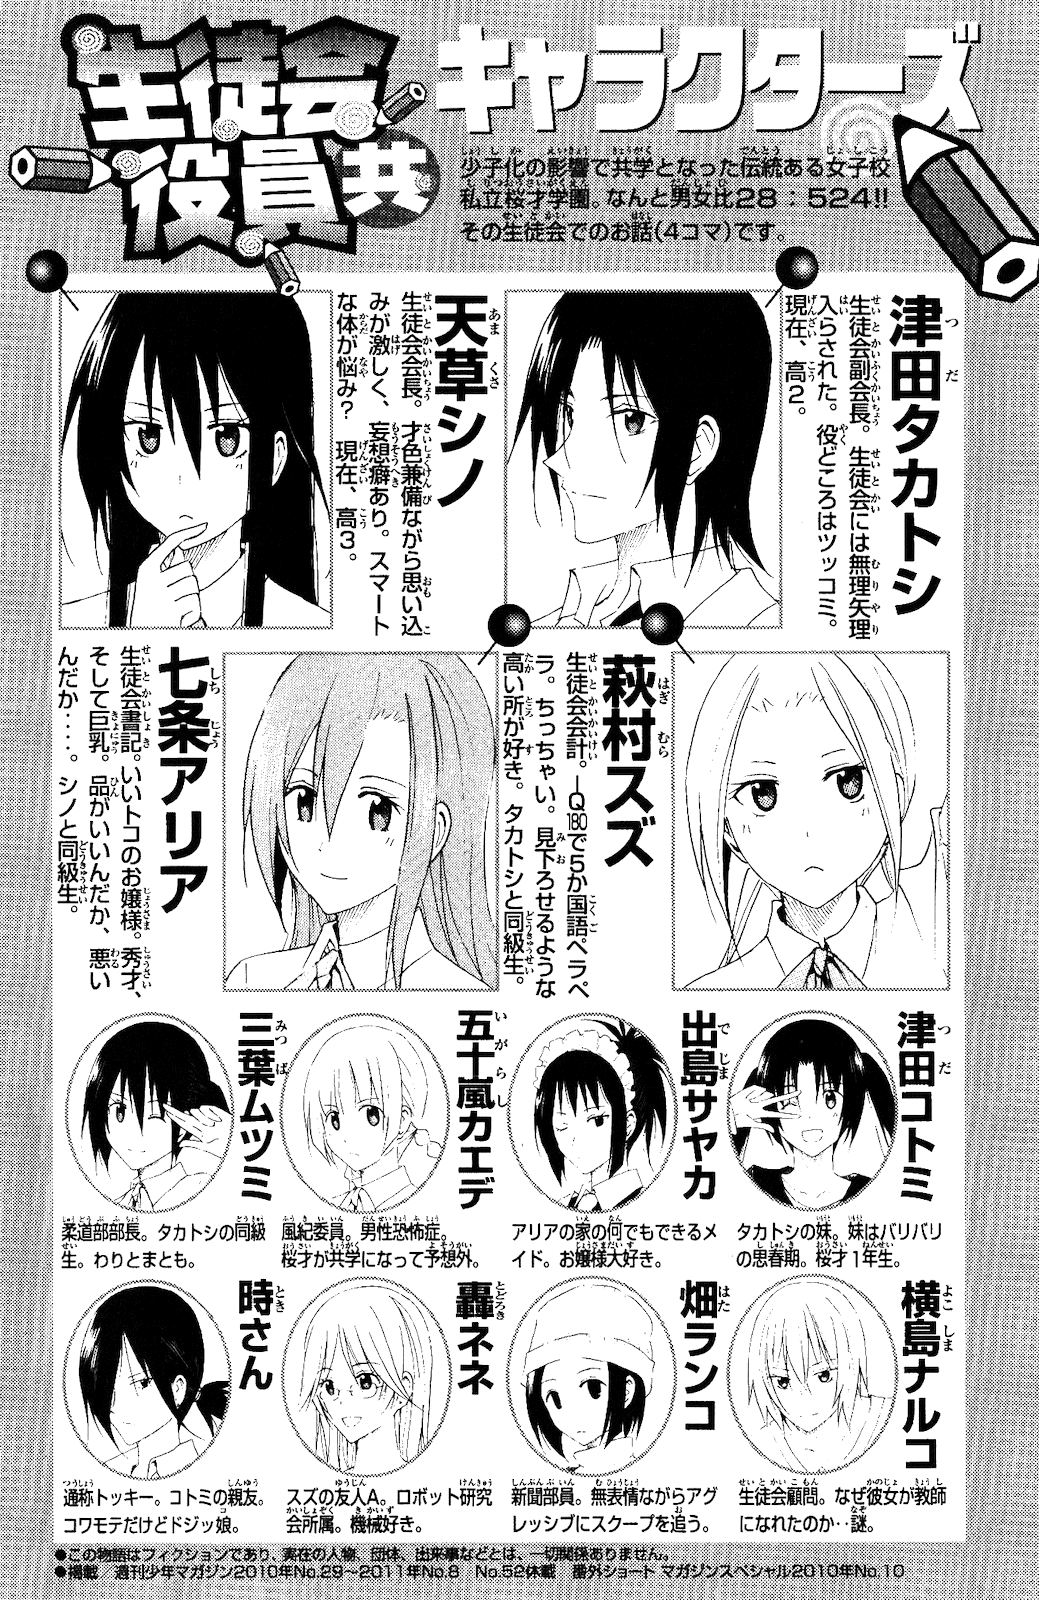 Qmanga Seitokai Yakuindomo Chapter 091 Read Online On Kiss Manga